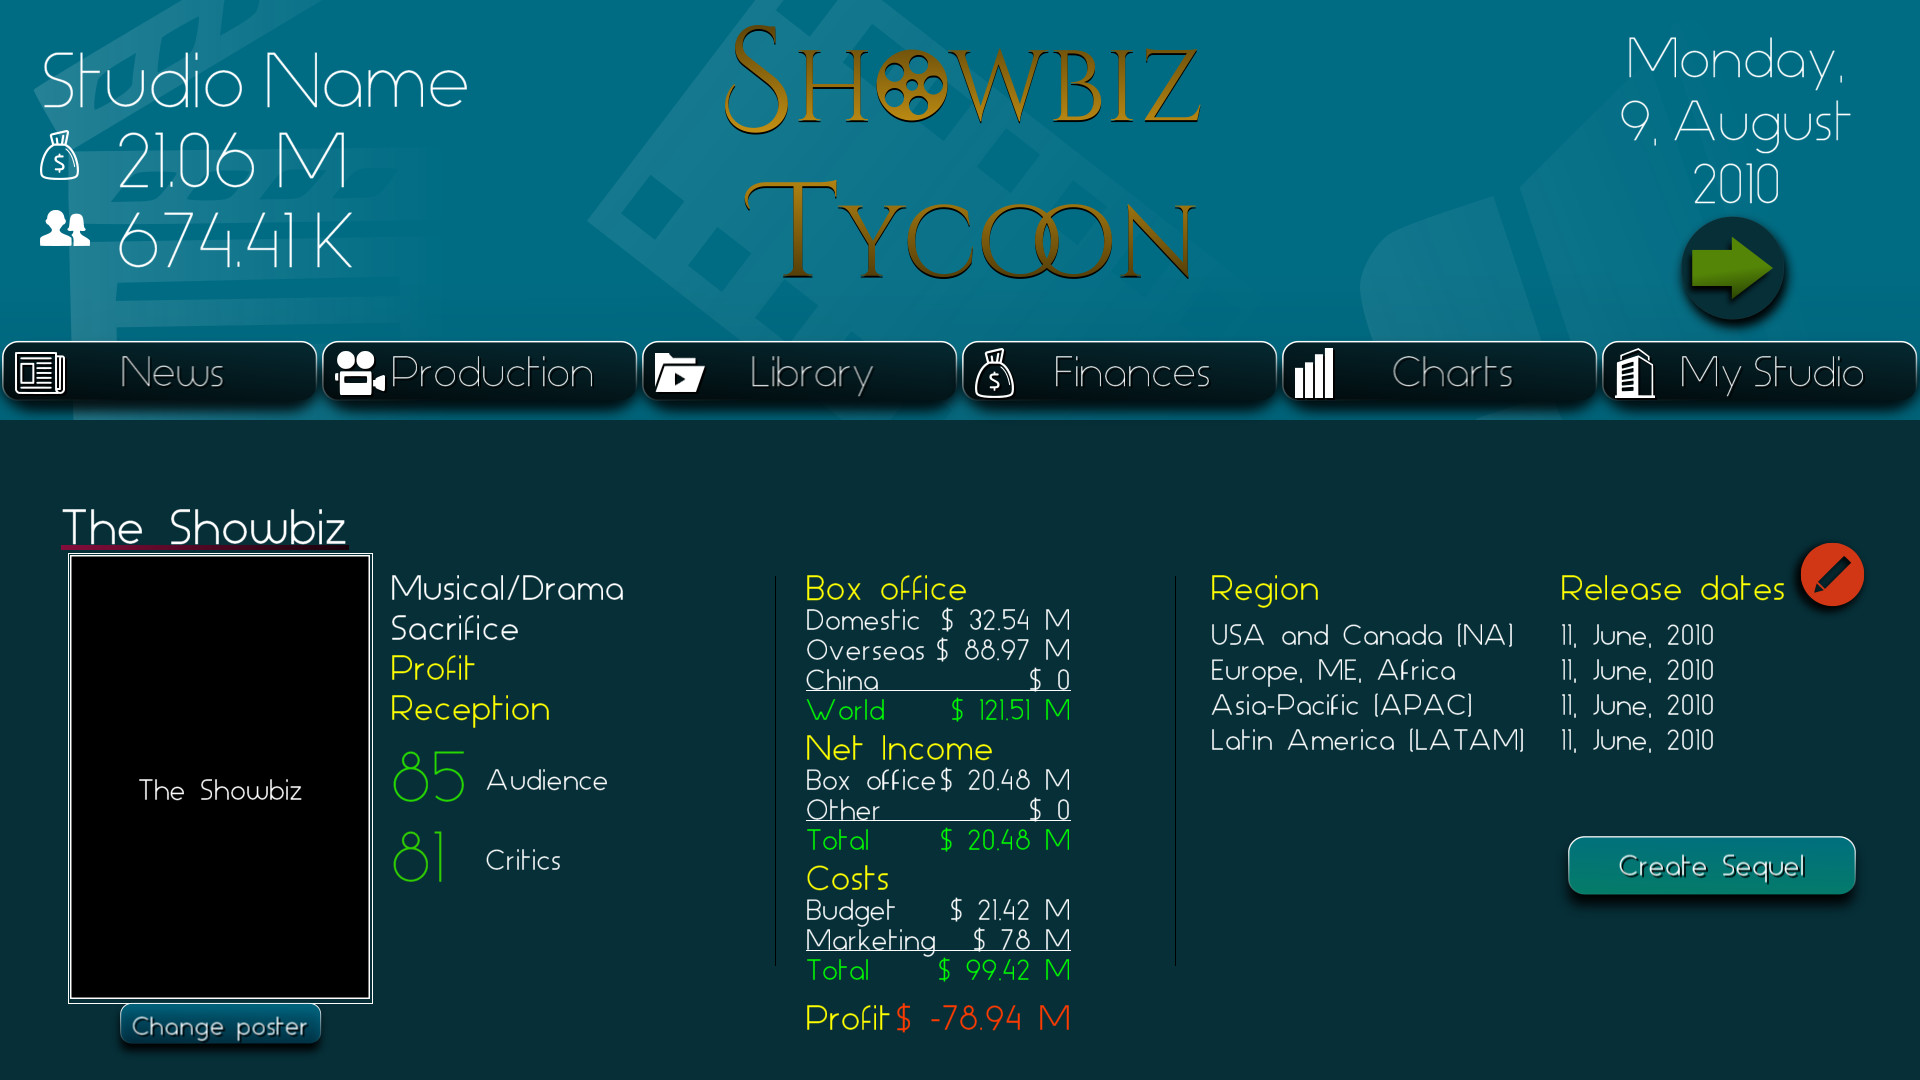 Showbiz Tycoon Free Download